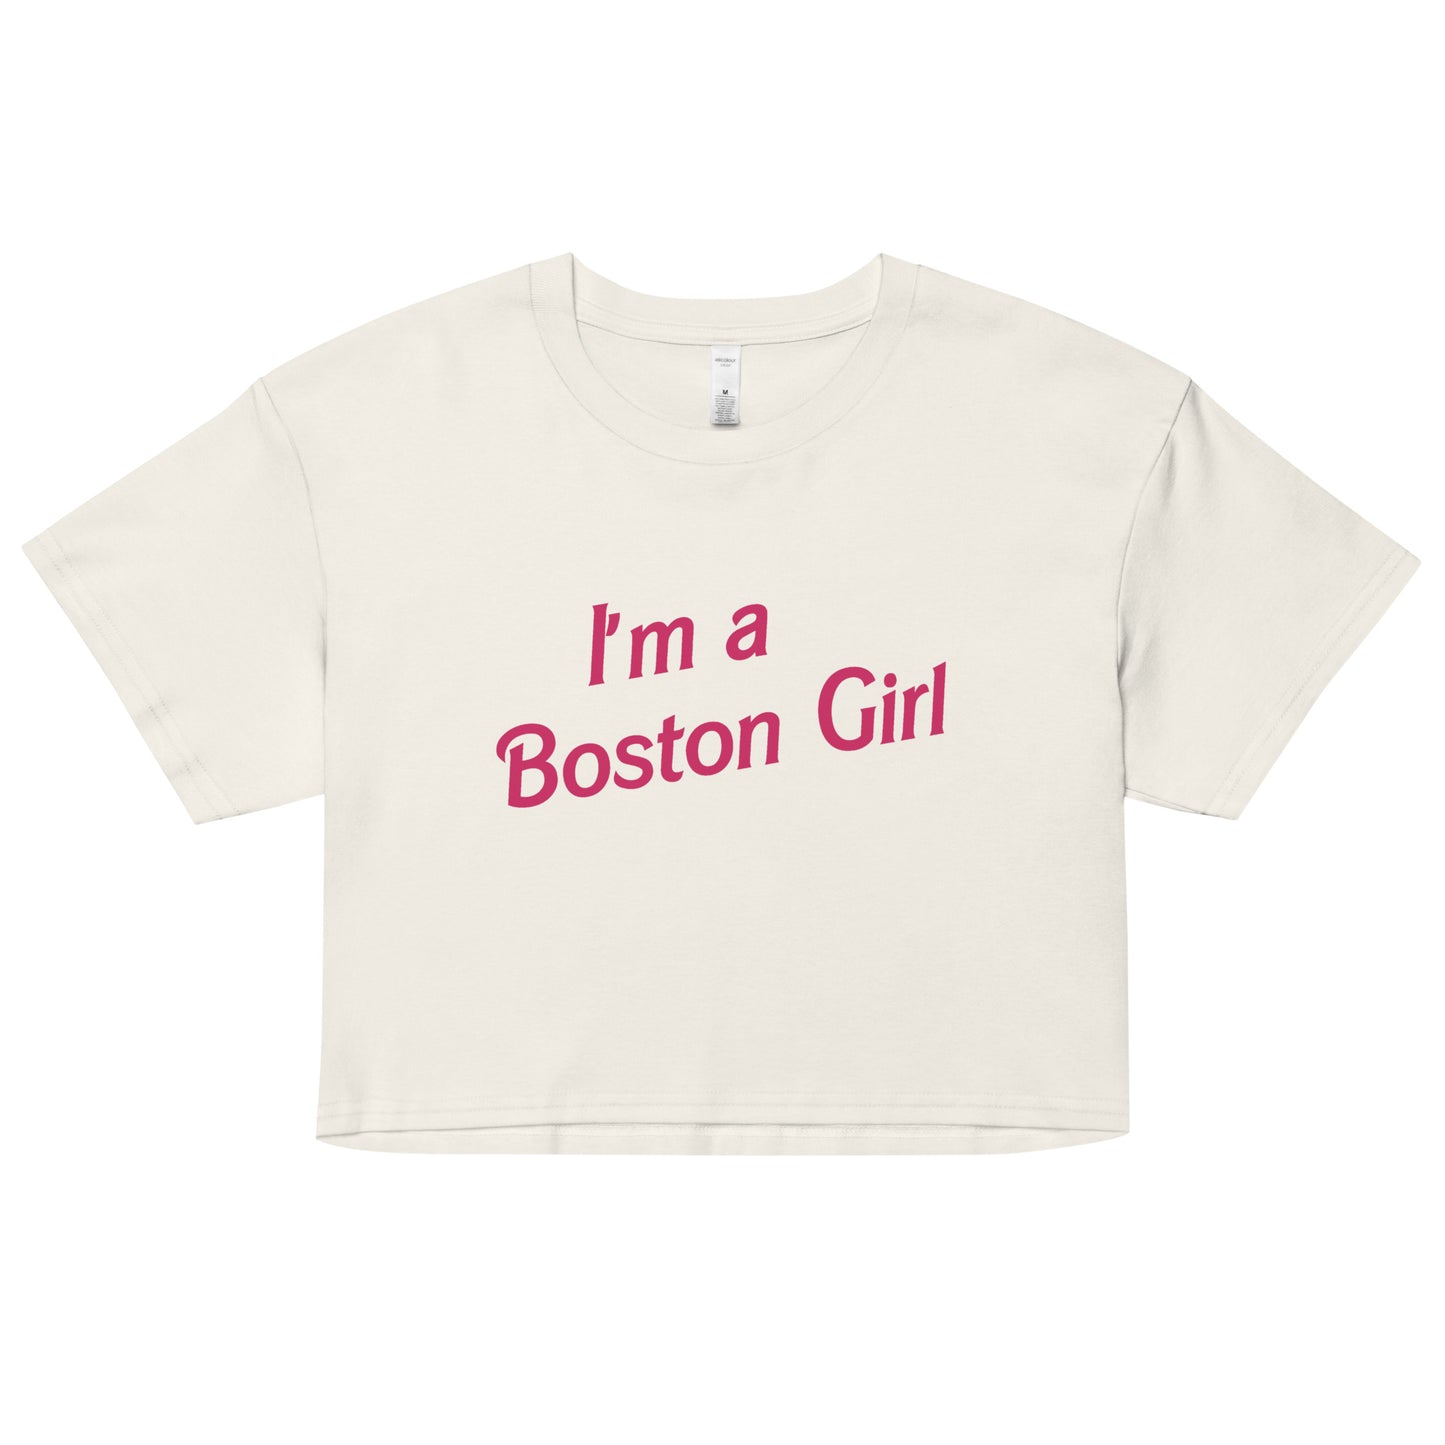 I'm a Boston Girl Women's Crop Top